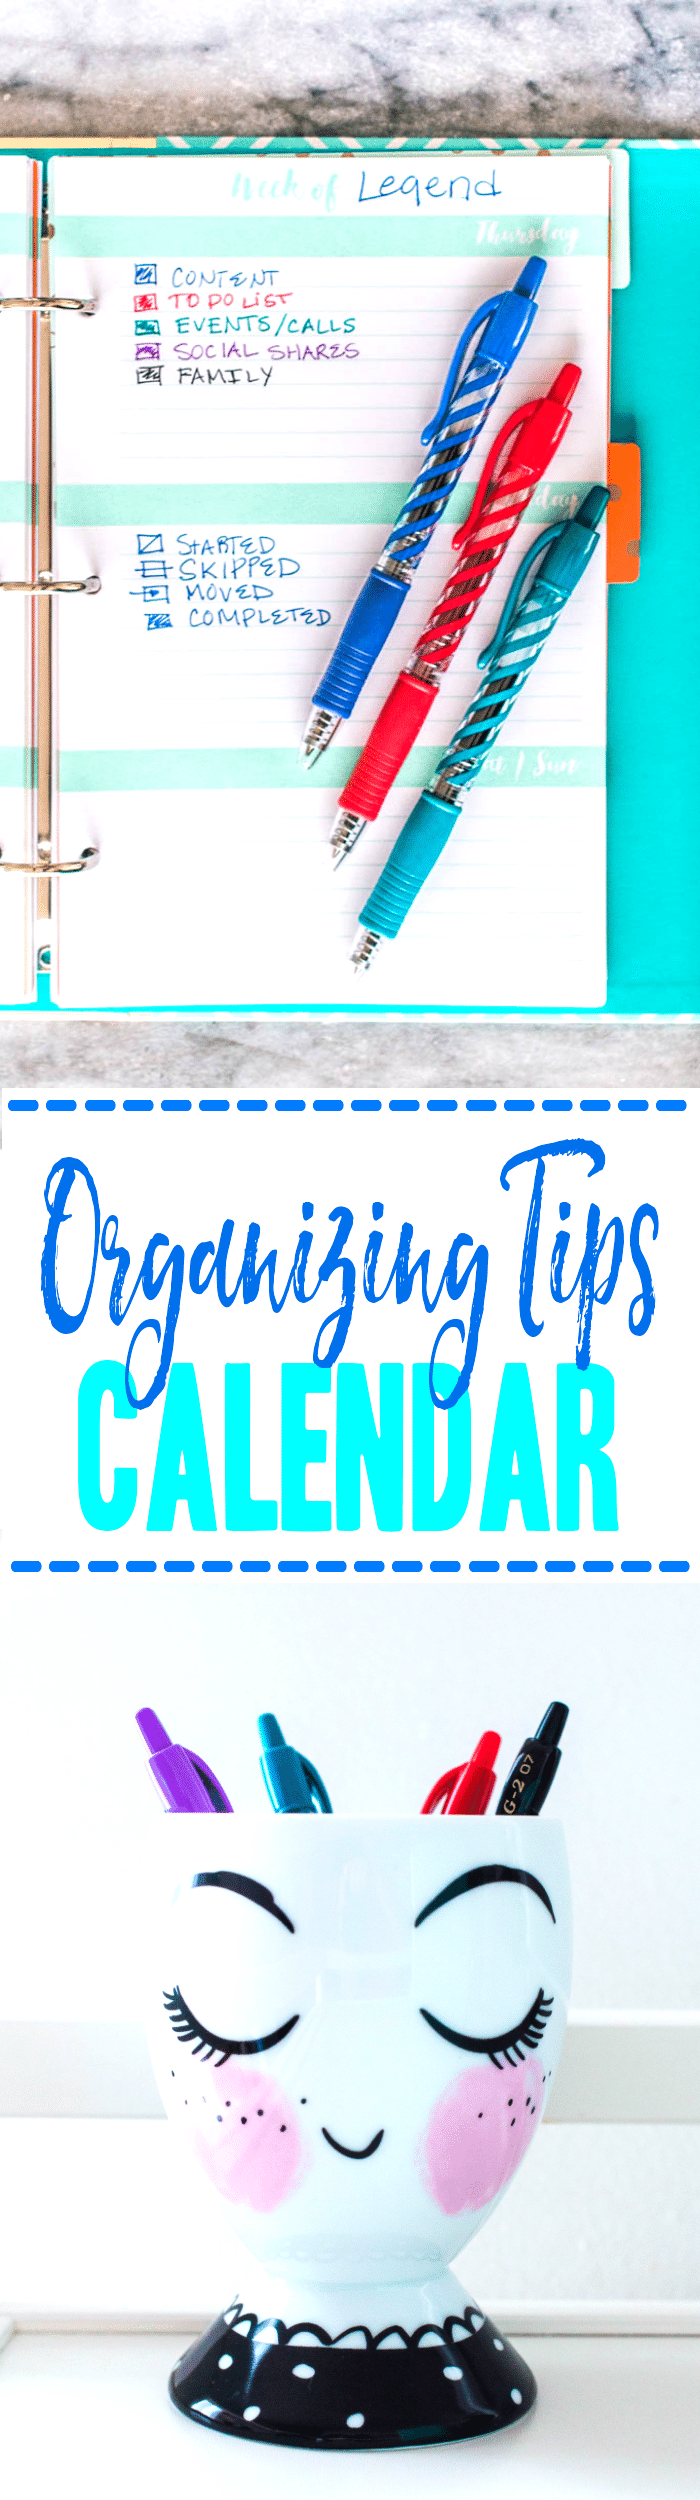 Organizing-Tips-for-Calendar